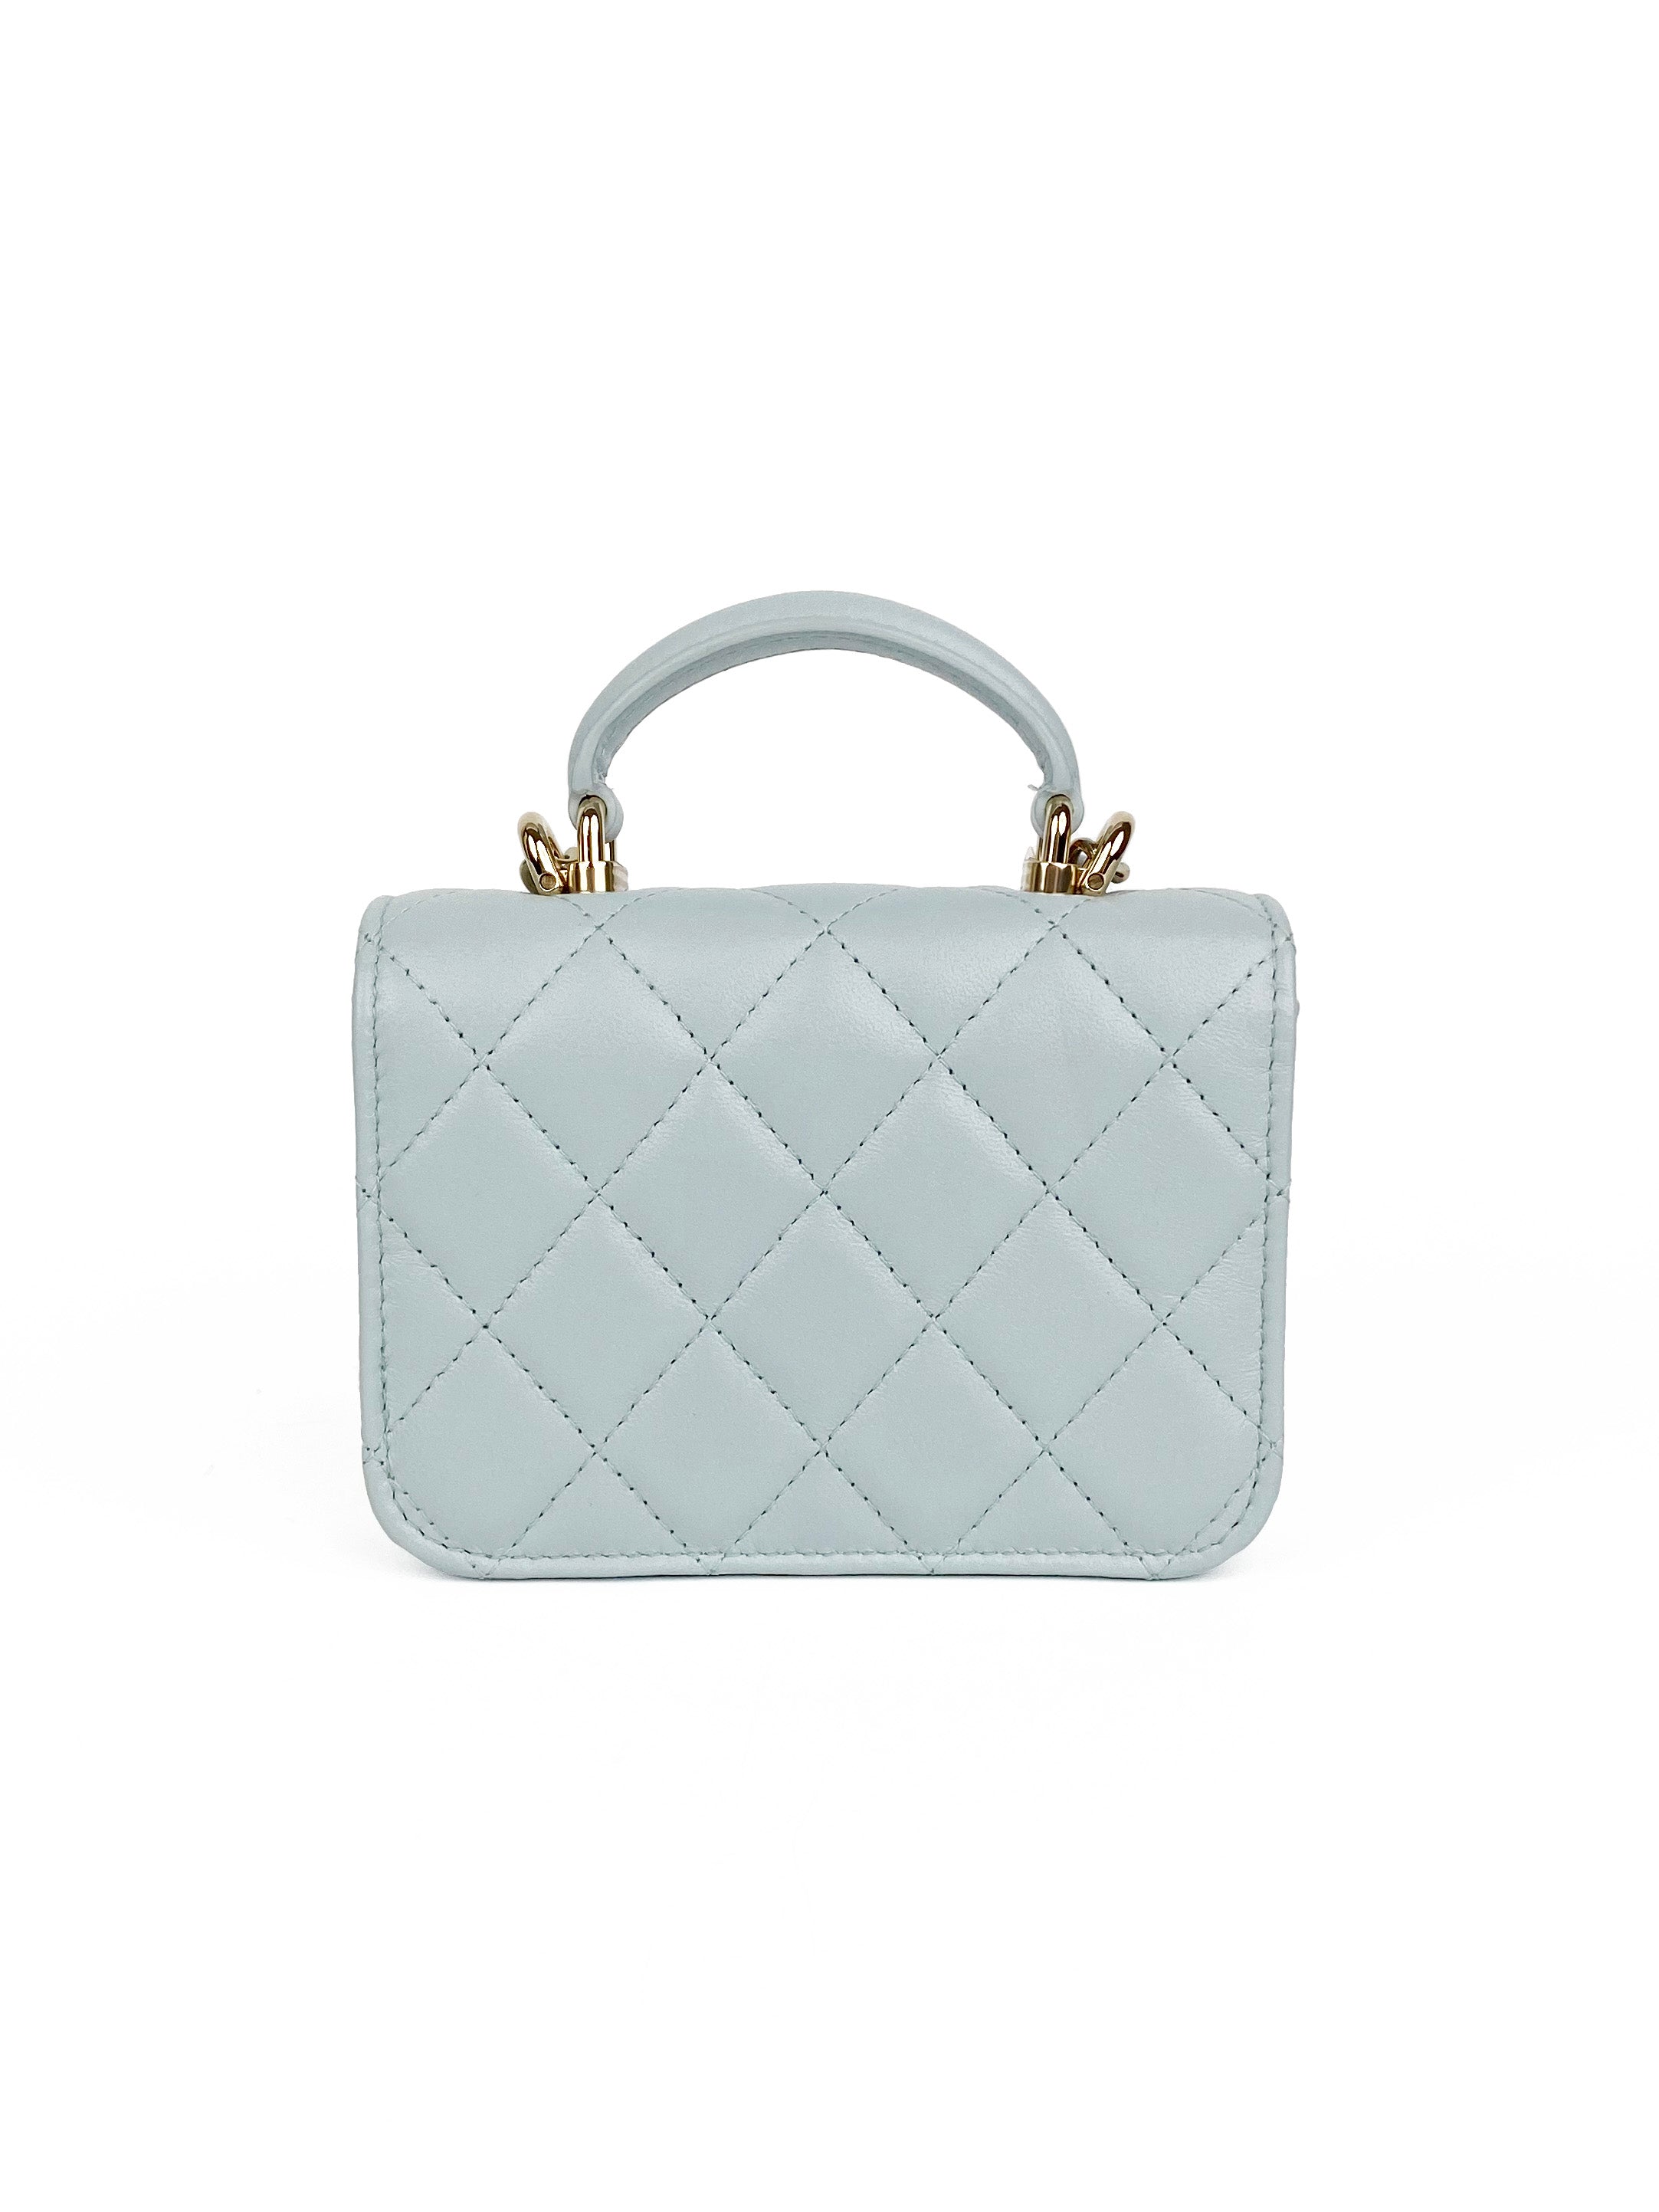 Chanel Mini Light Blue Flap Bag with Handle